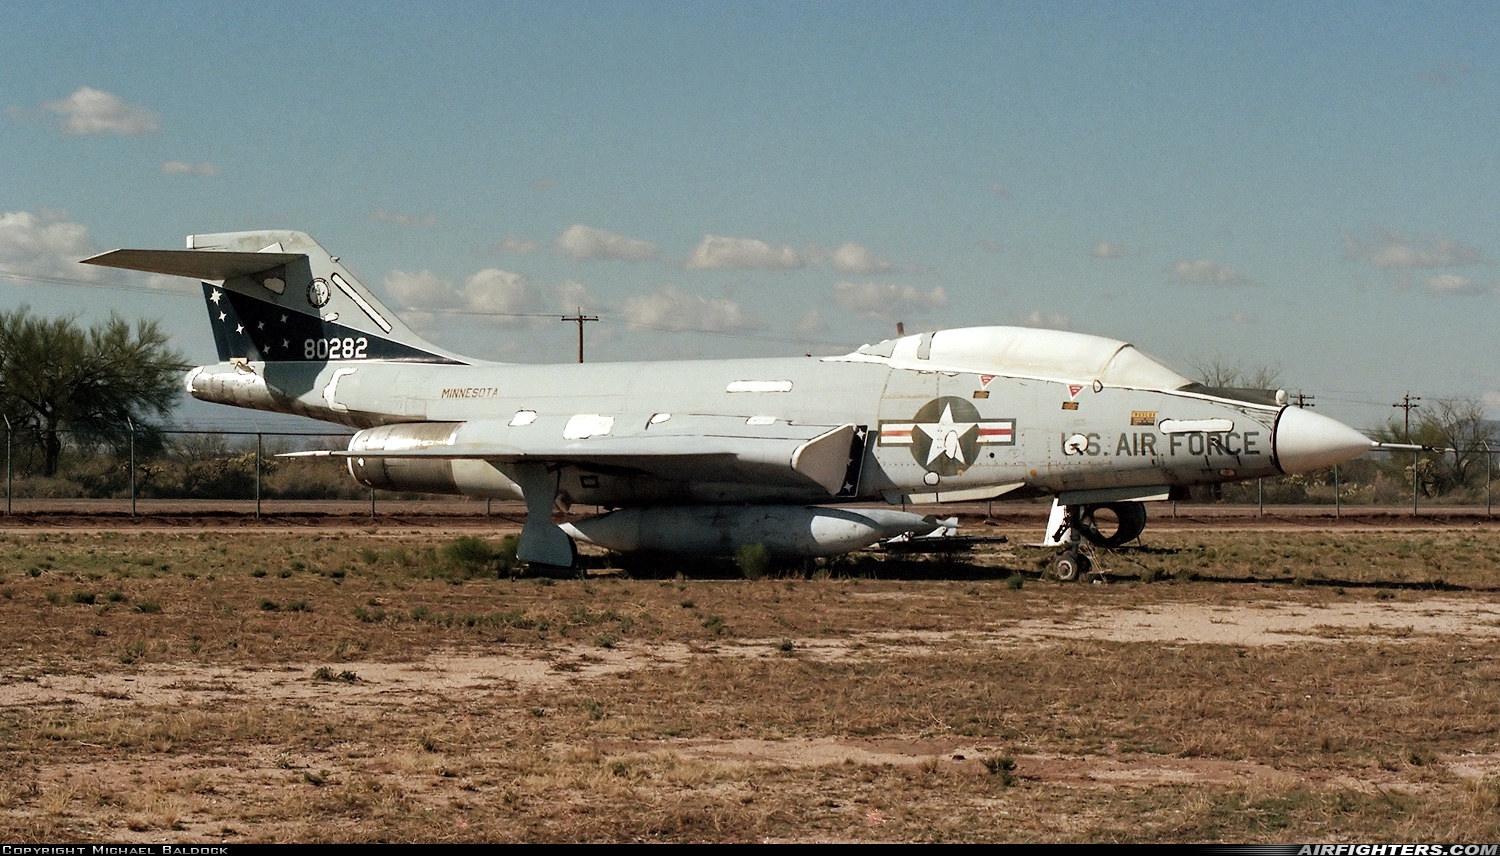 USA - Air Force McDonnell F-101B Voodoo 58-0282 at Tucson - Davis-Monthan AFB (DMA / KDMA), USA